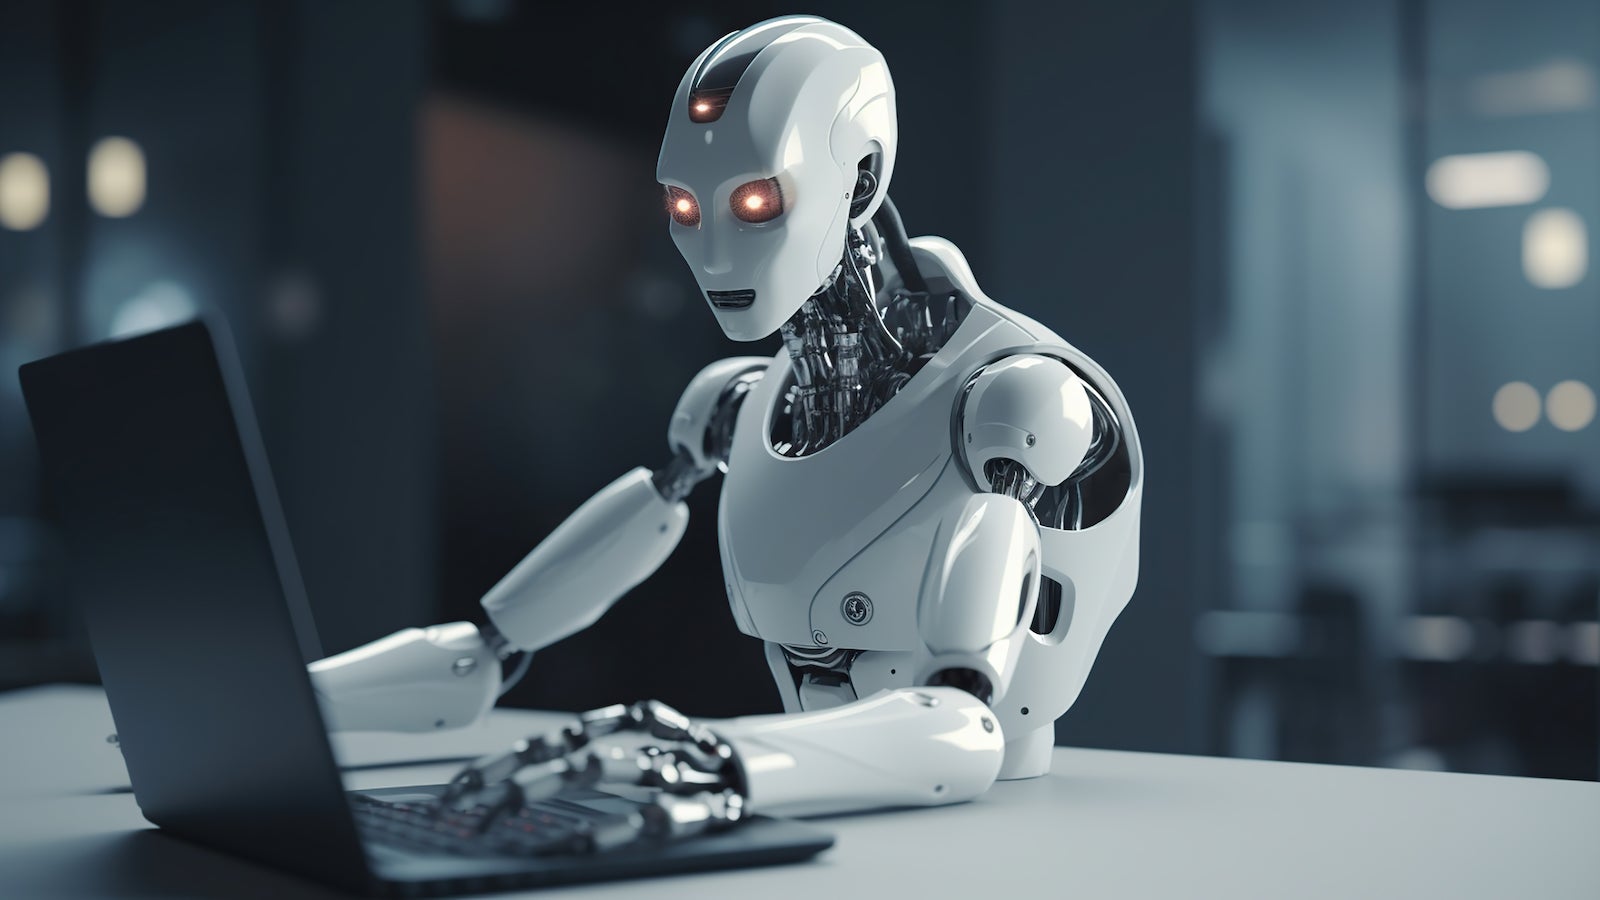 Robot using computer